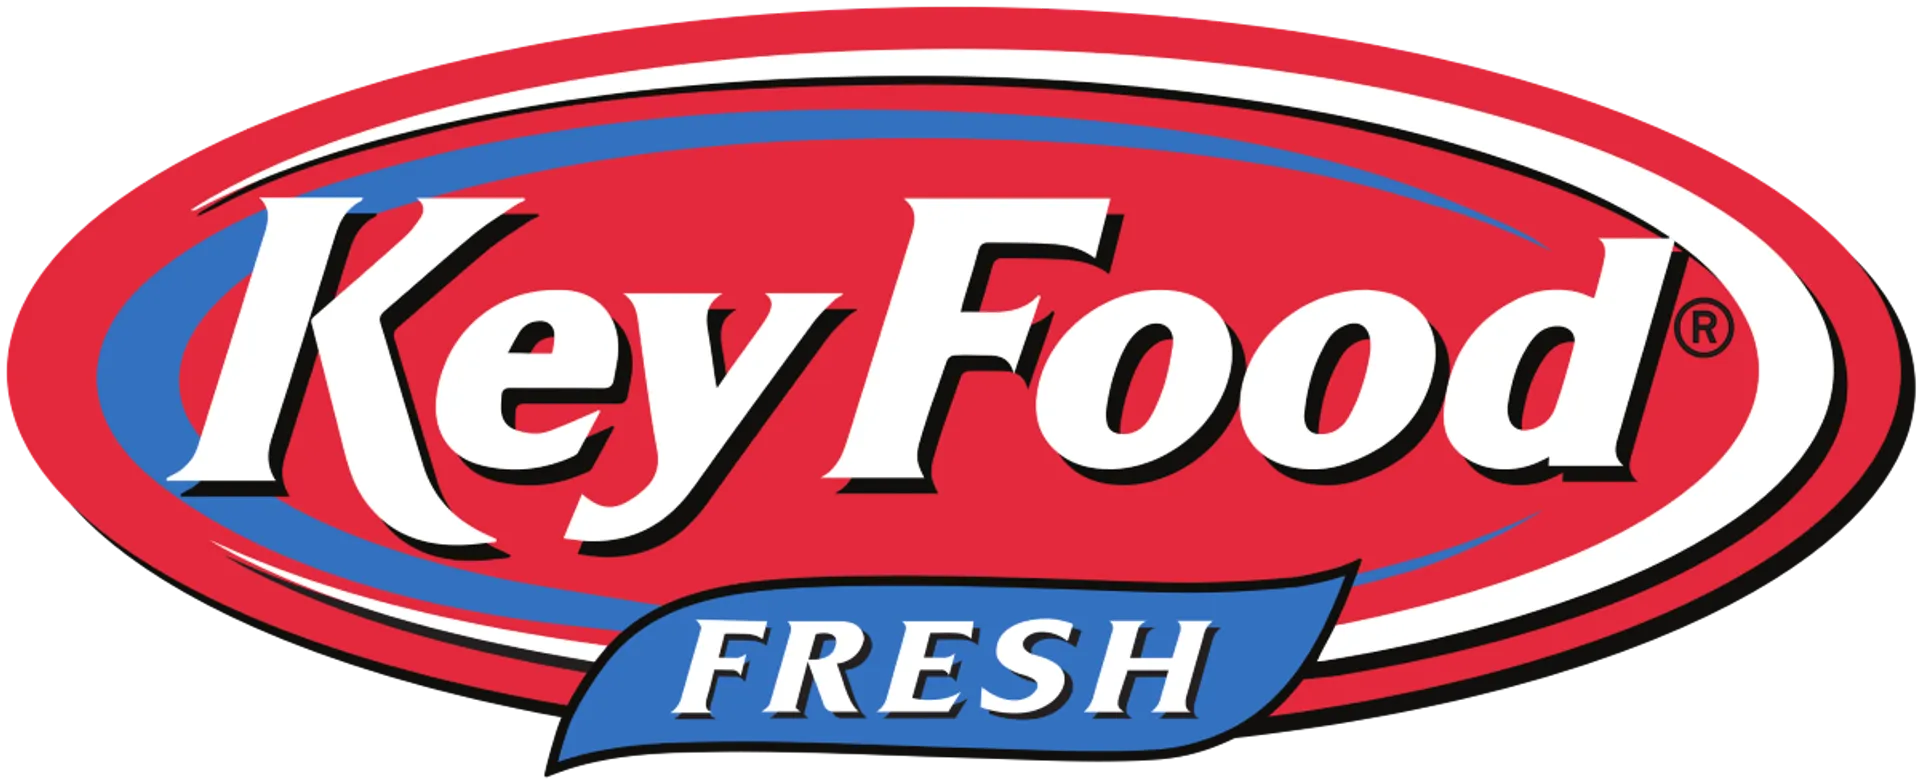 KEY FOOD logo. Current weekly ad